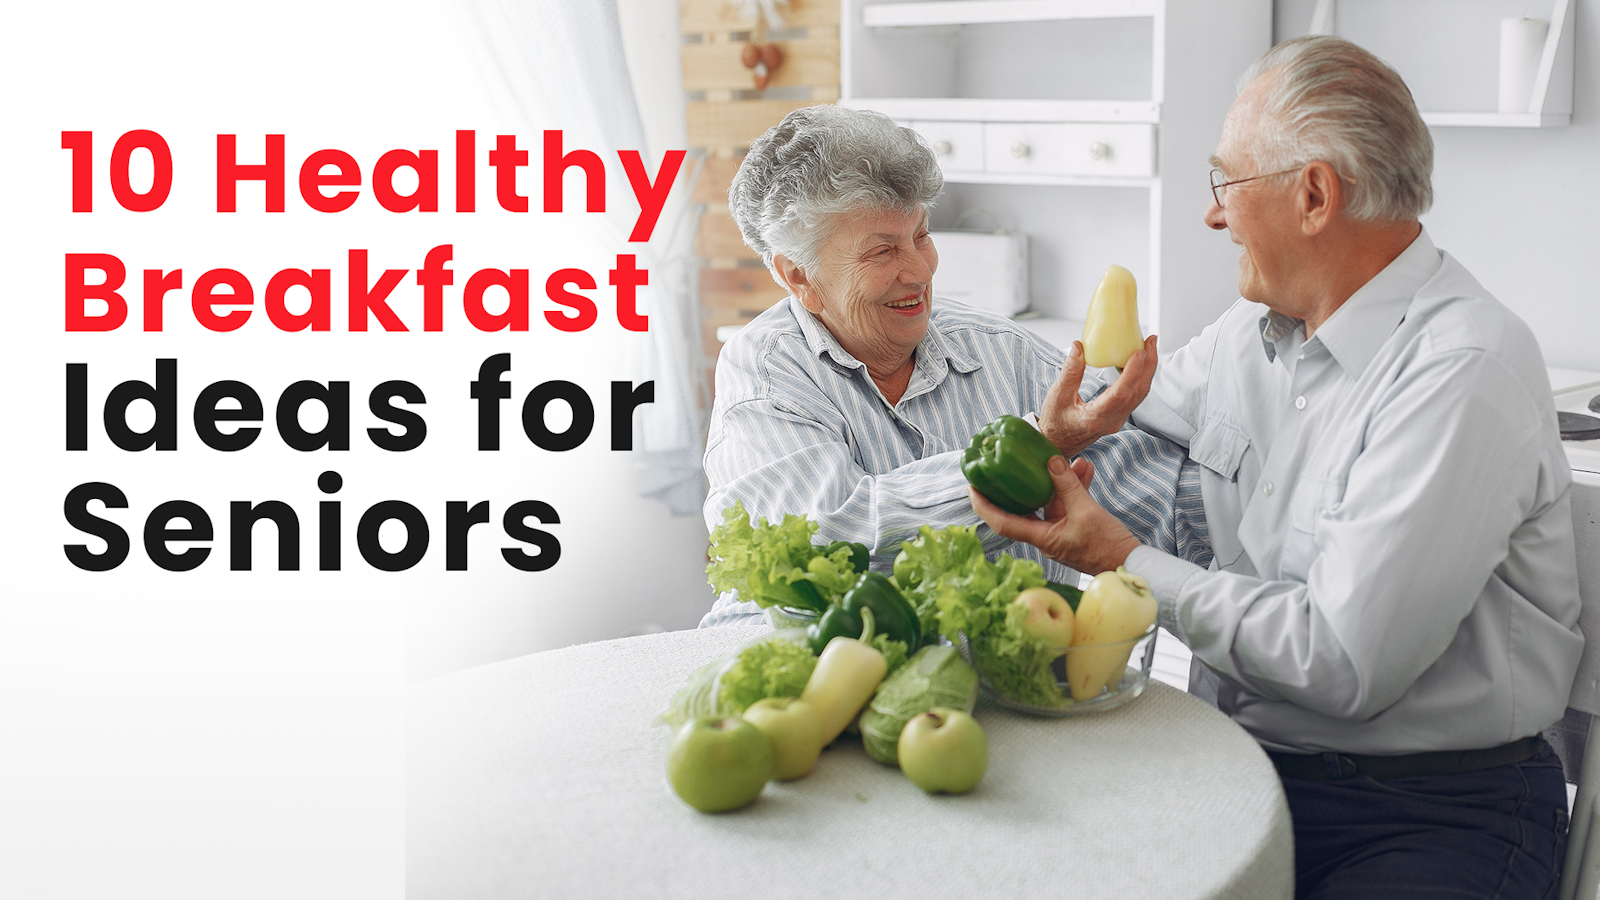 10 Healthy Breakfast Ideas for Seniors